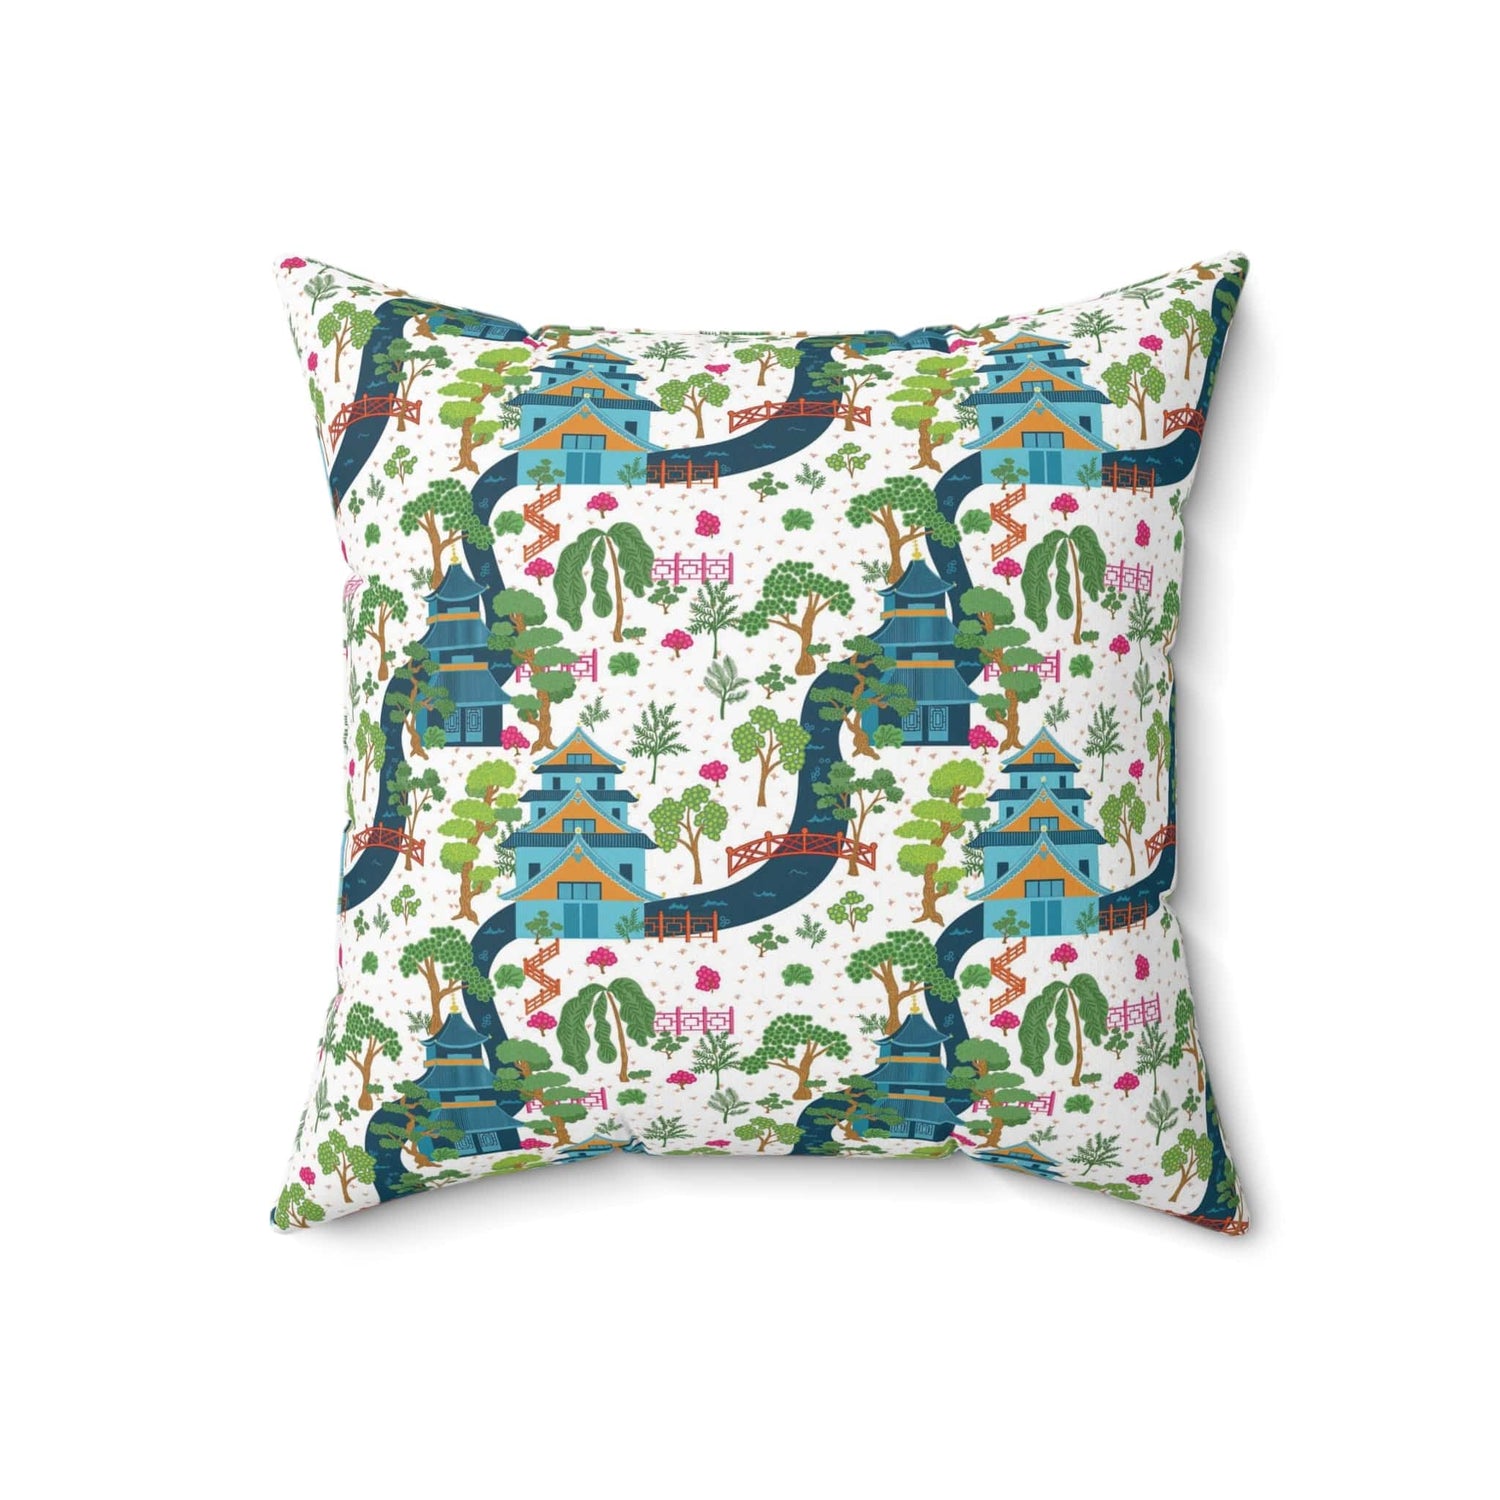 Kate McEnroe New York Chinoiserie Pagoda Garden Pillow with Insert, Oriental Scenic Cushion, Asian - Inspired Throw Pillow KM13819925Throw Pillows92233501364470569089